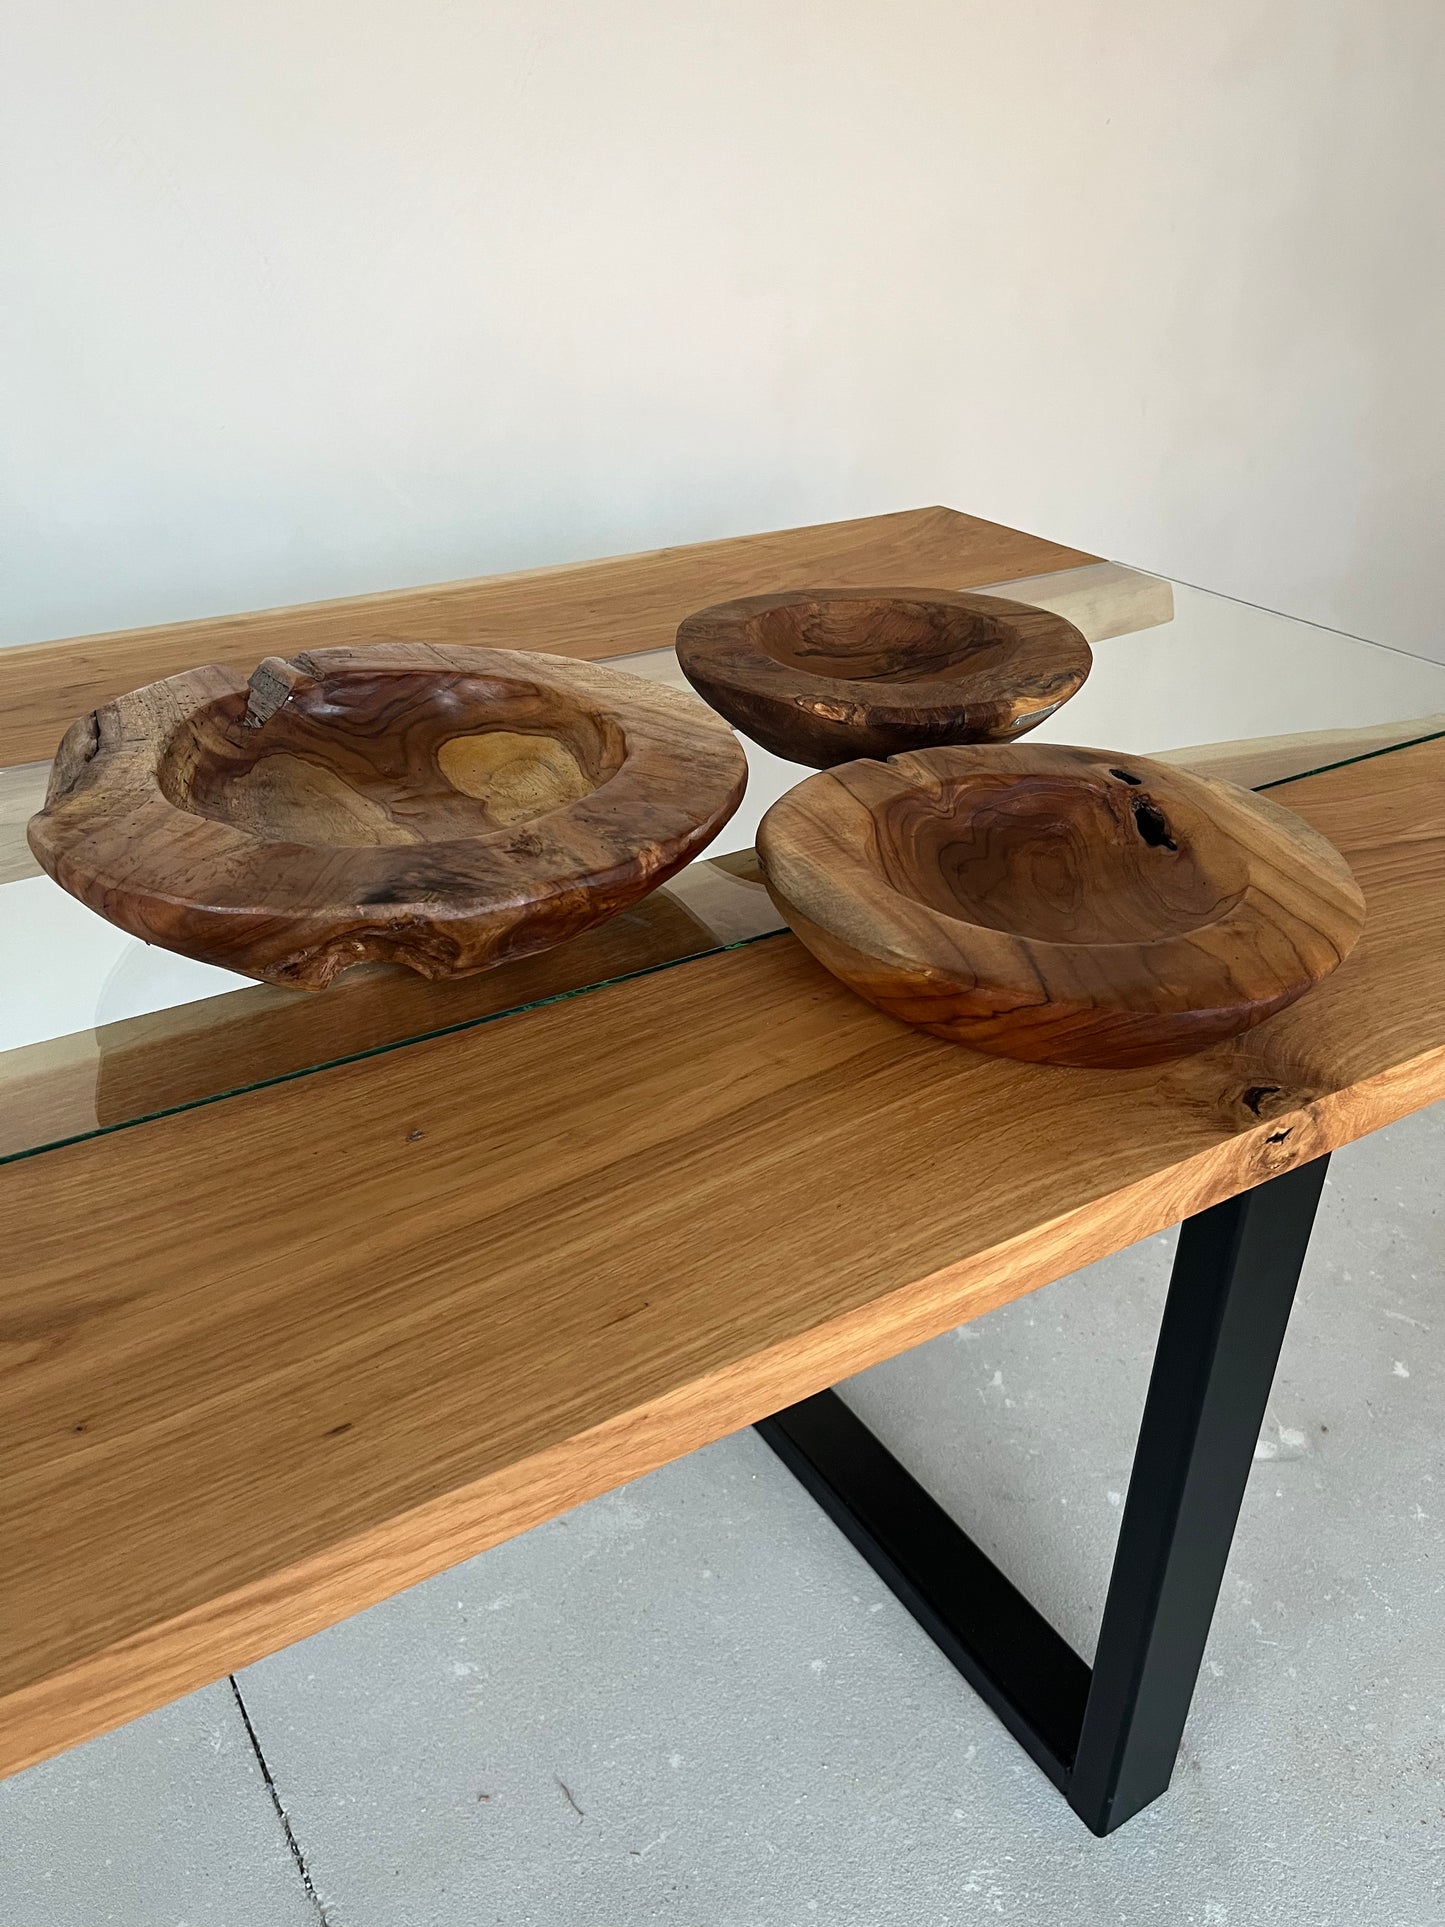 Solid wood bowl 30 cm